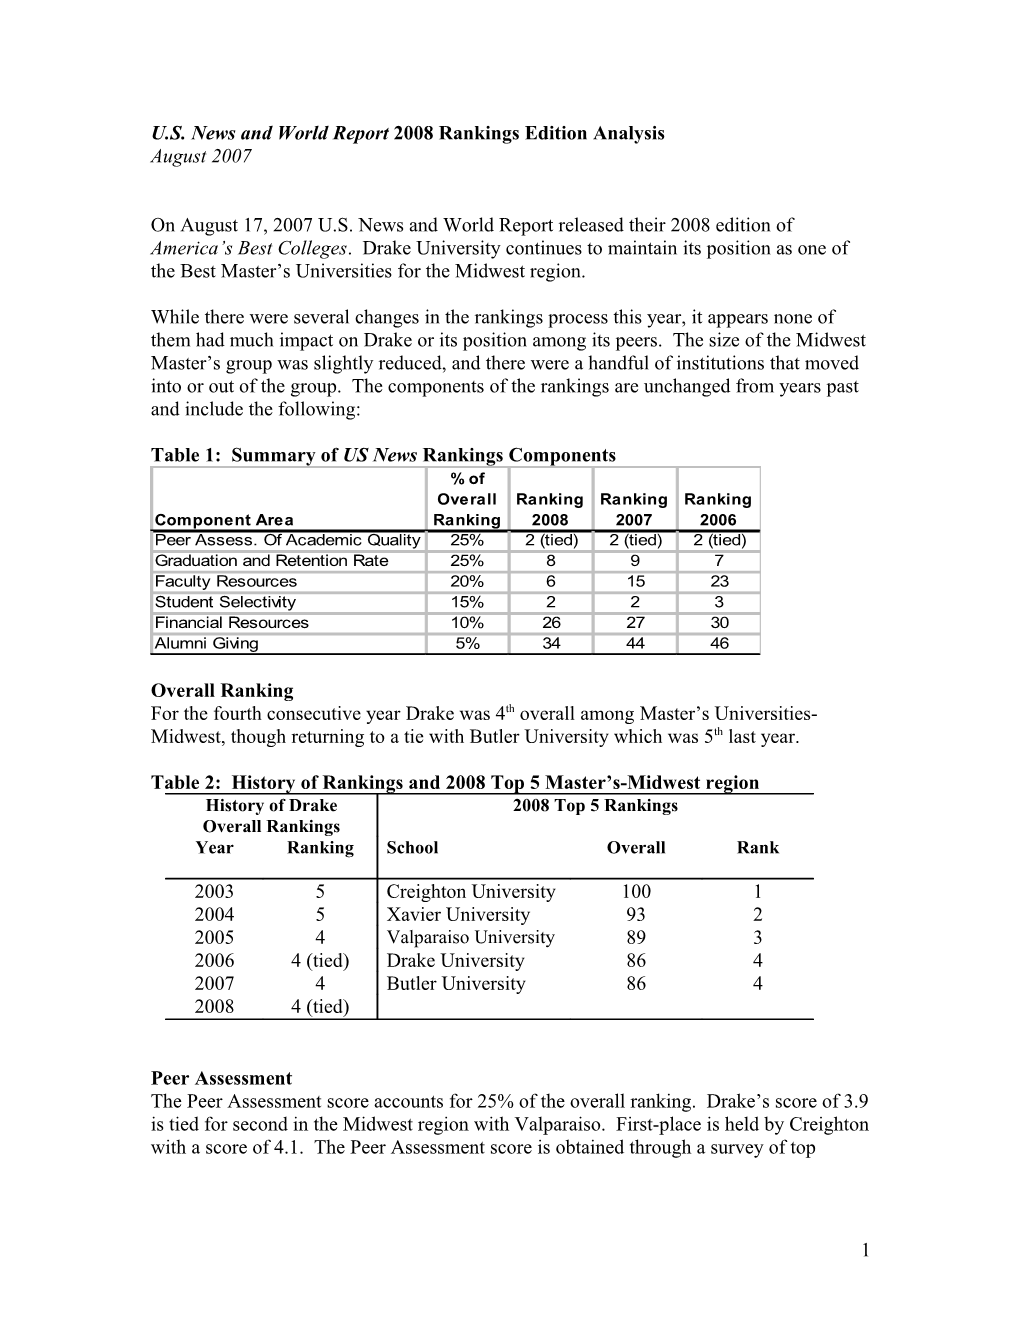 USNWR 2008 Edition-Rankings Analysis